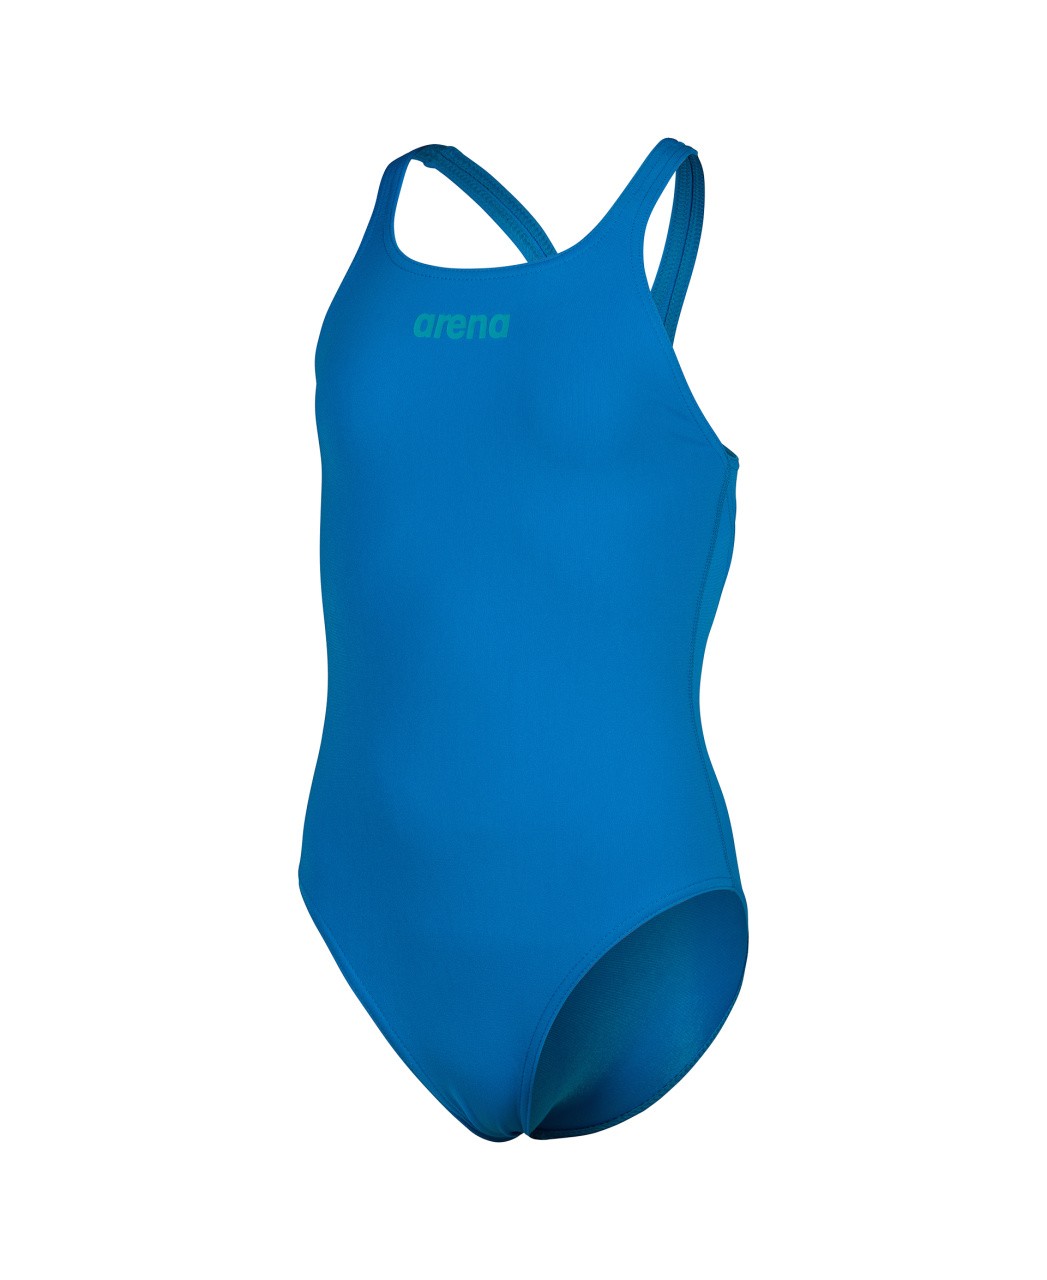 G Team Swimsuit Swim Pro Solid blue